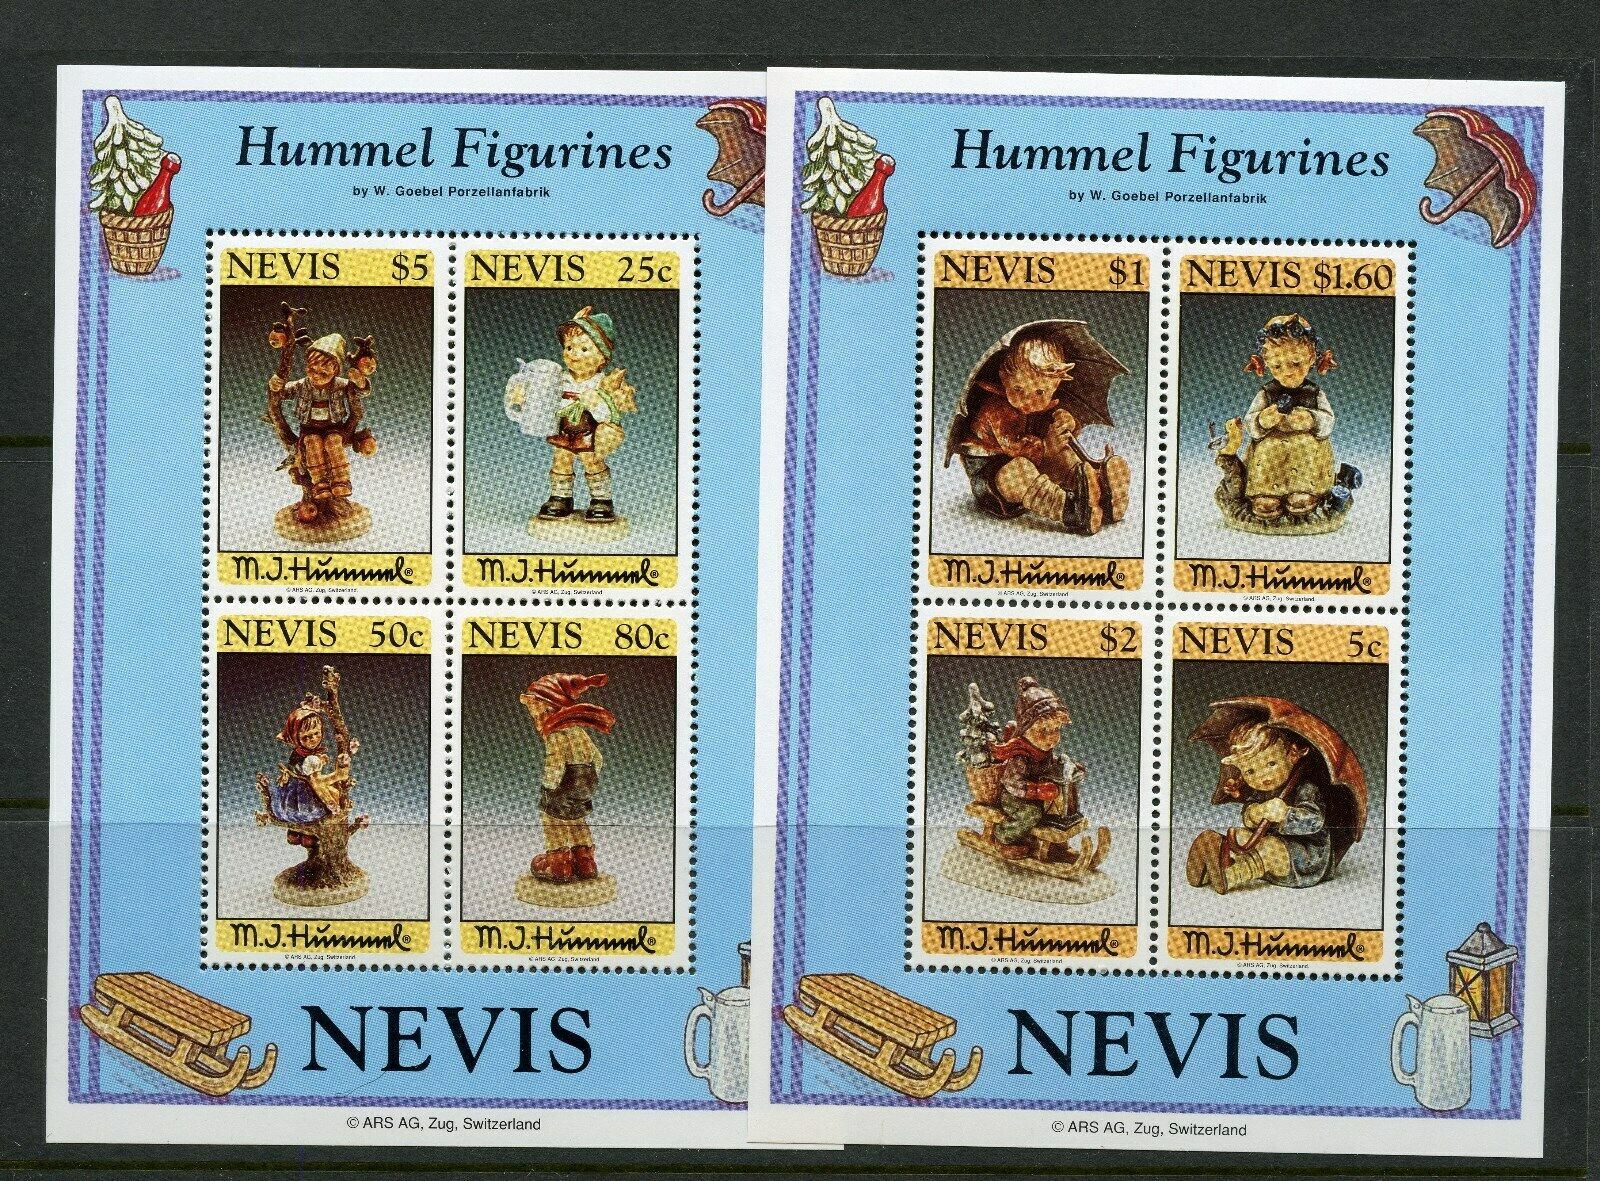 NEVIS HUMMEL FIGURINES SOUVENIR SHEETS MINT NH--SCOTT VALUE $13.00